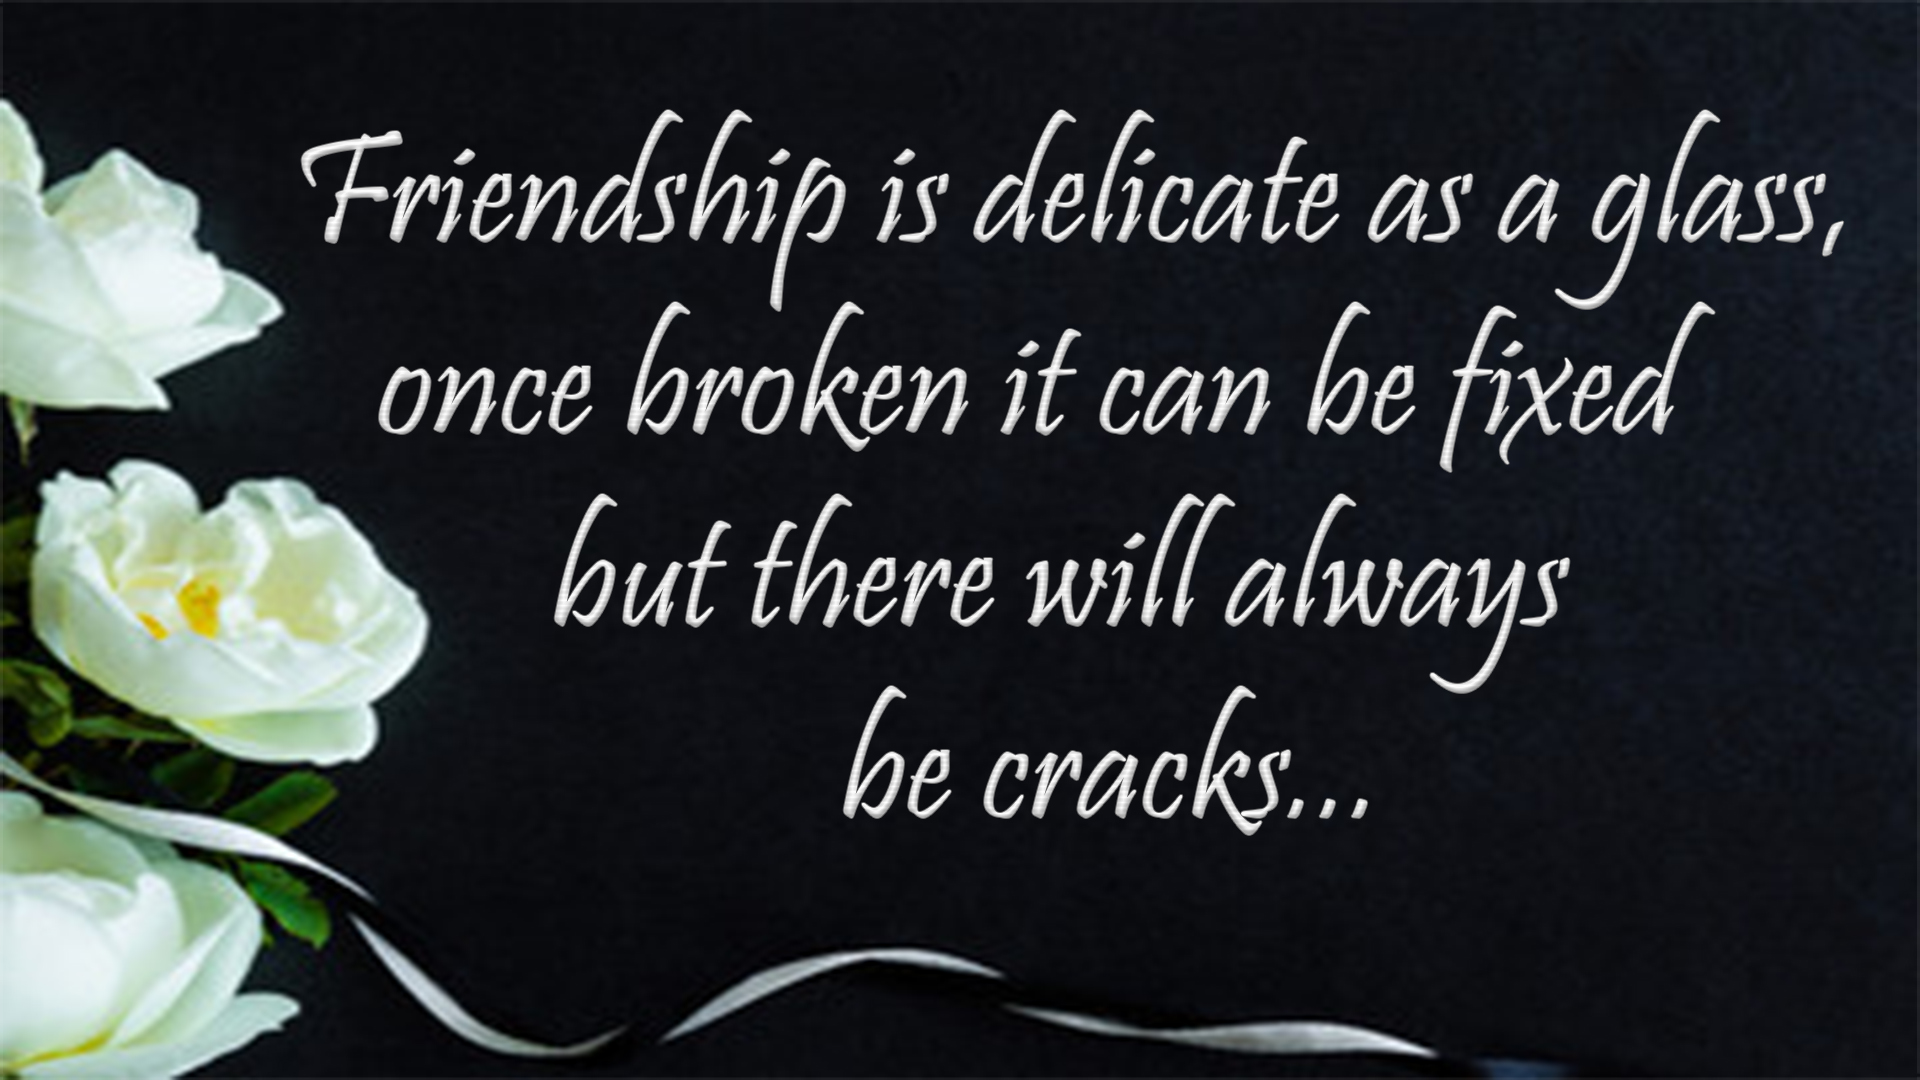 Sad broken friendship quotes images friendship breakup quotes